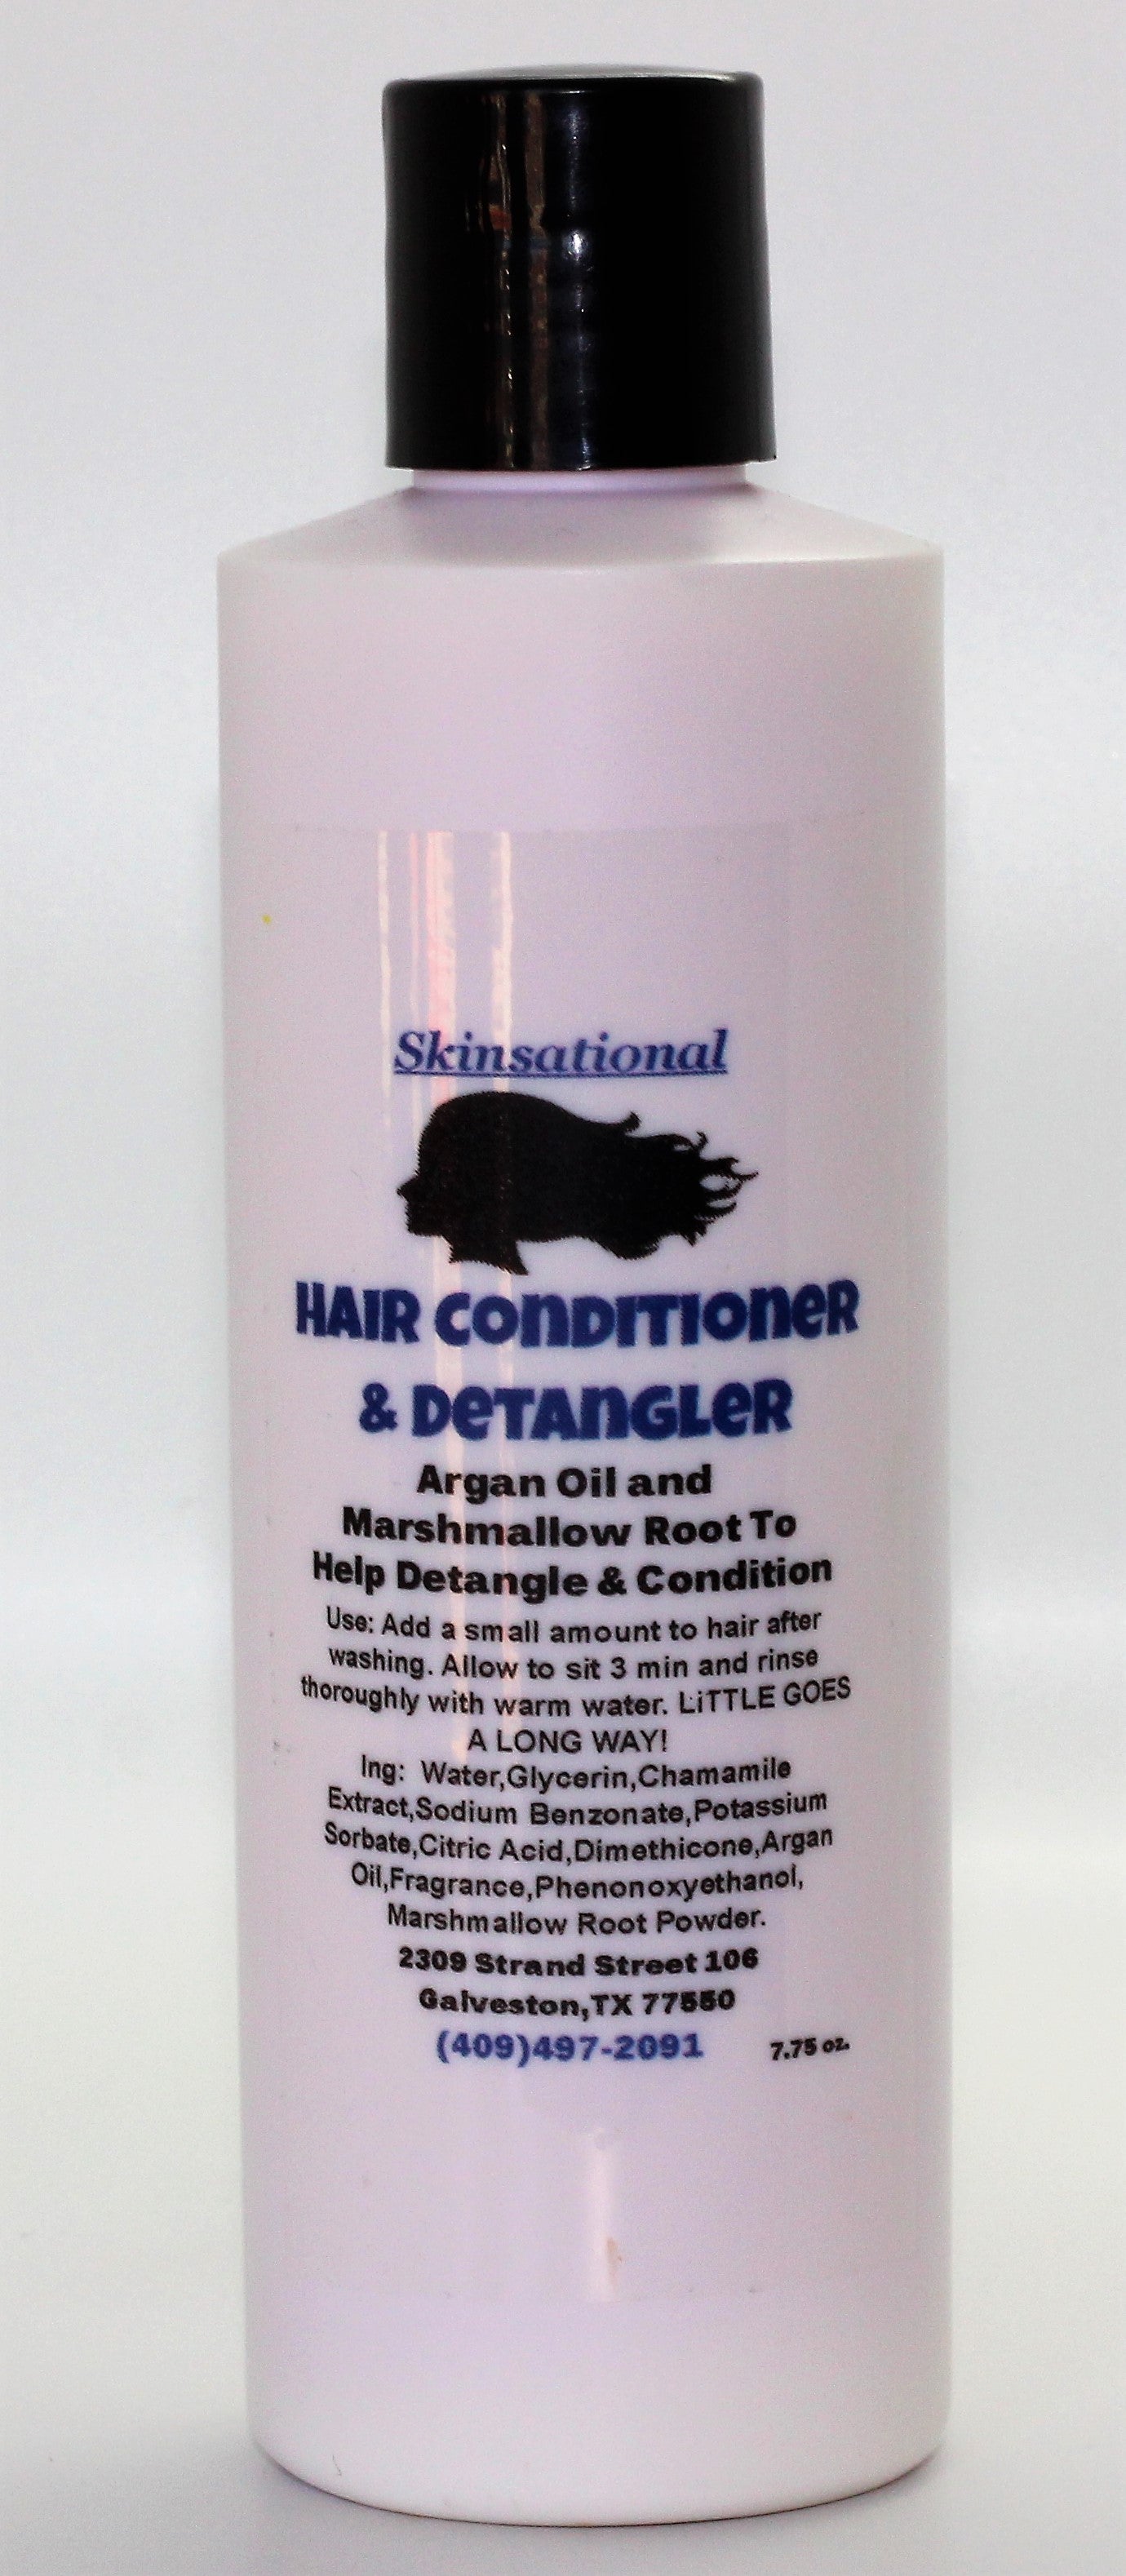 Hair Conditioner and Detangler